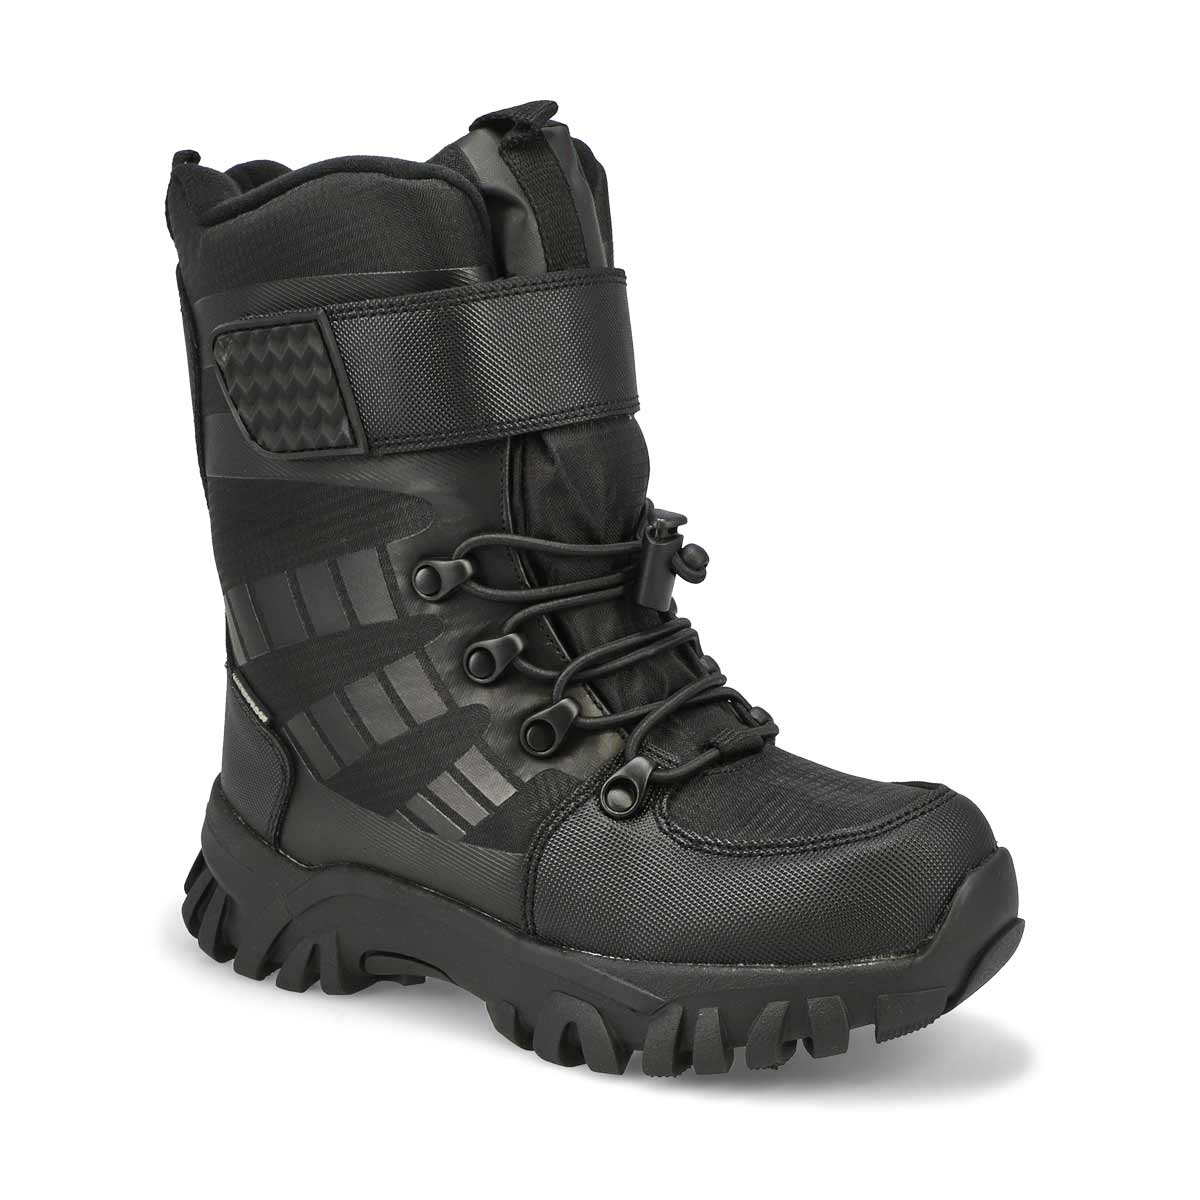 Boys' Trek Waterproof Winter Boot - Black